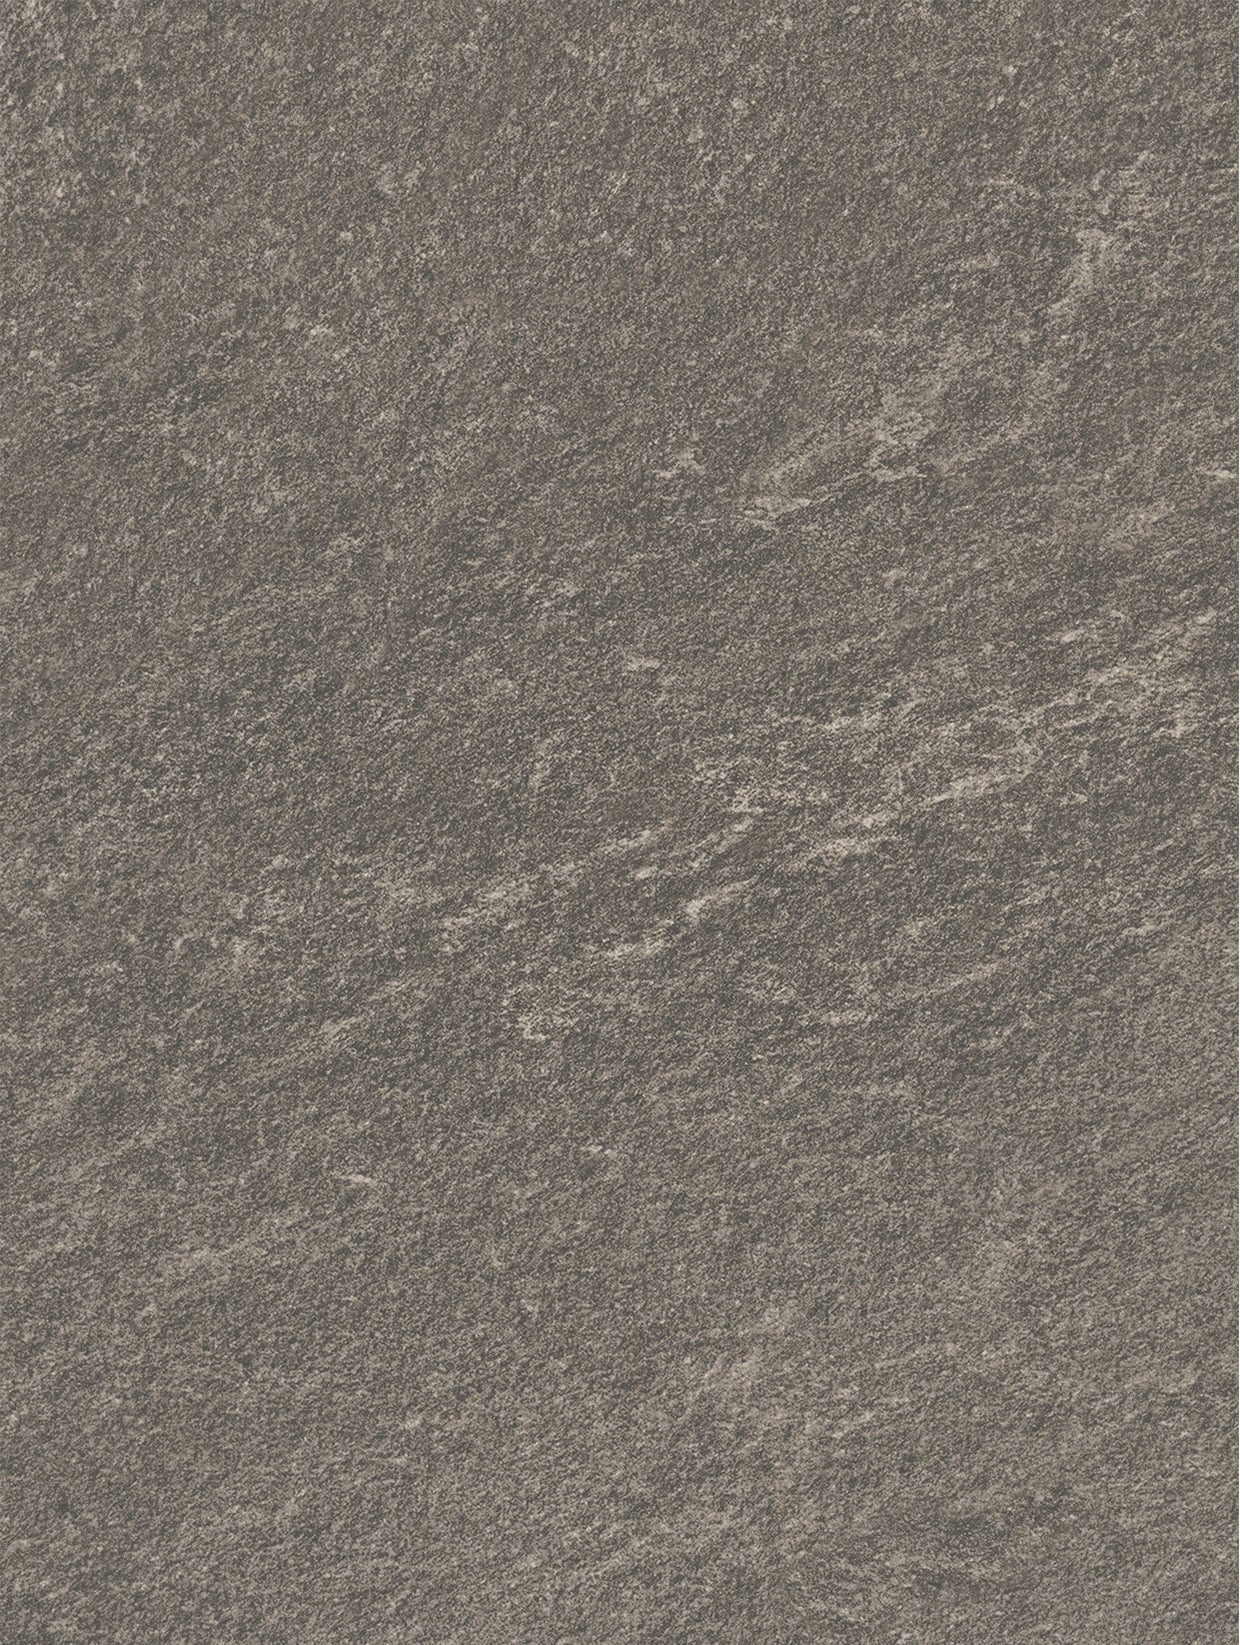 Steen - Graniet | Natuursteen decor graniet structuur monsterfilm A5